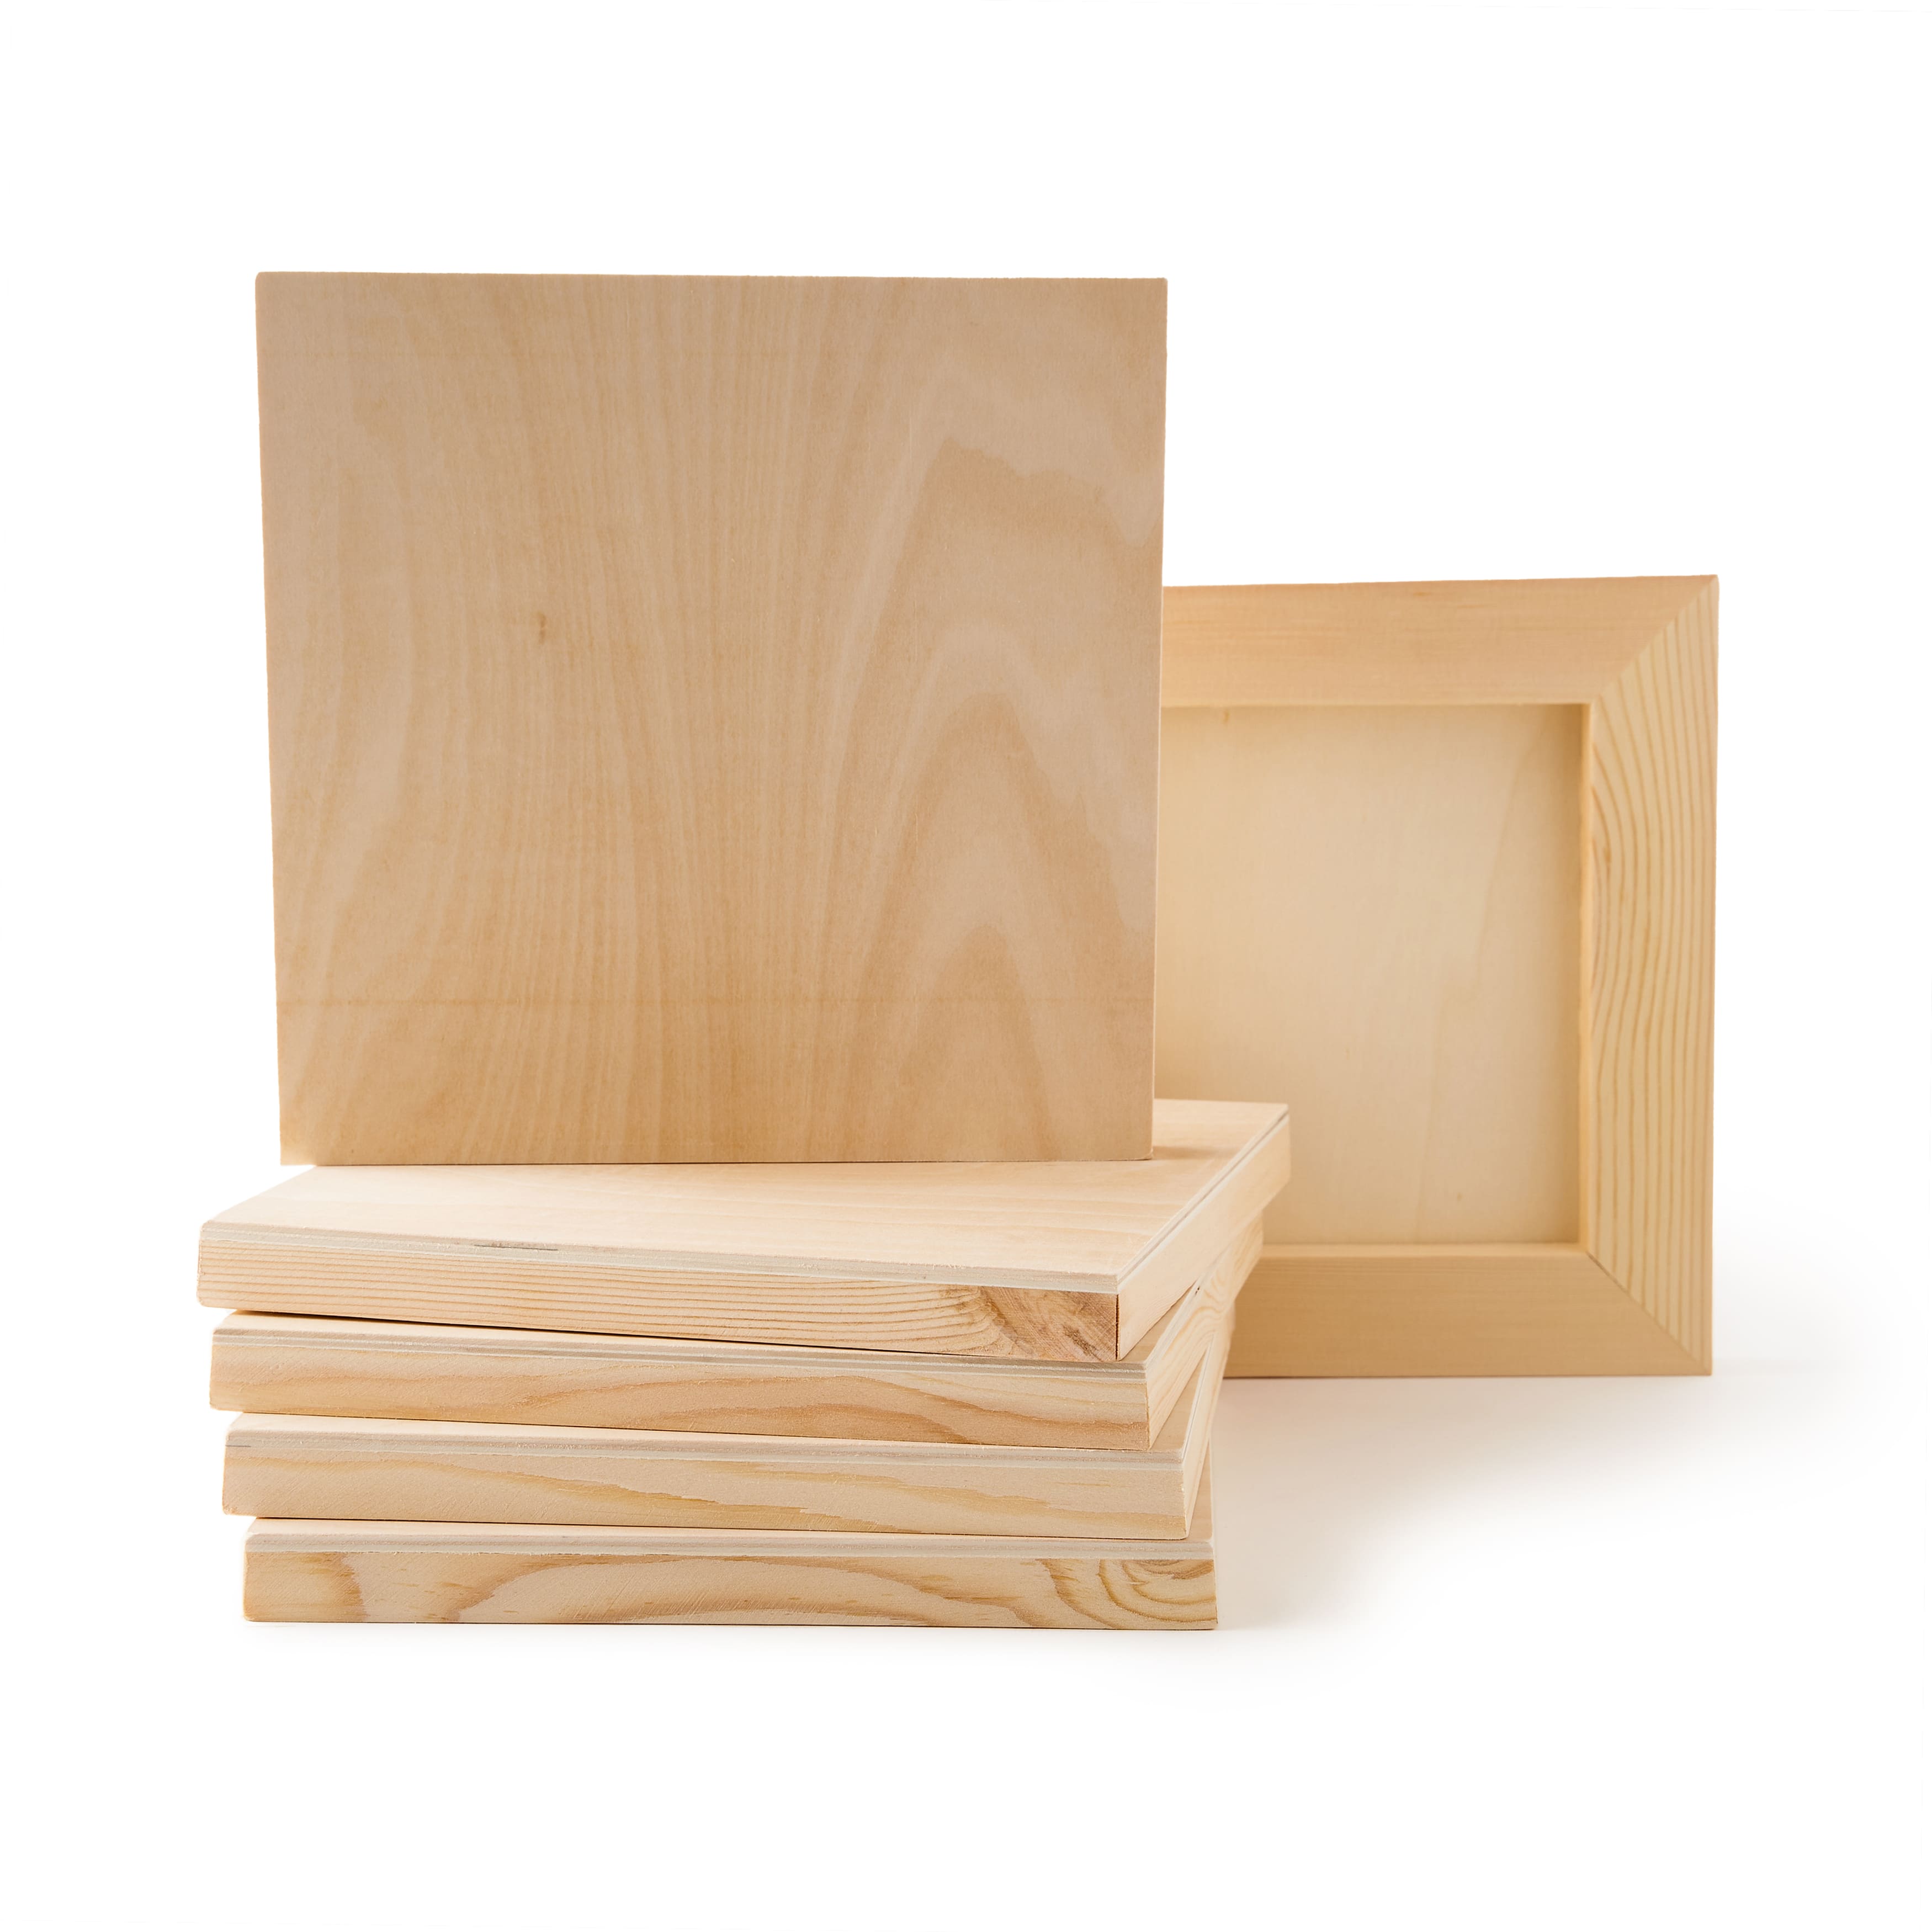 Wood Painting Surfaces & Hardboard Panels